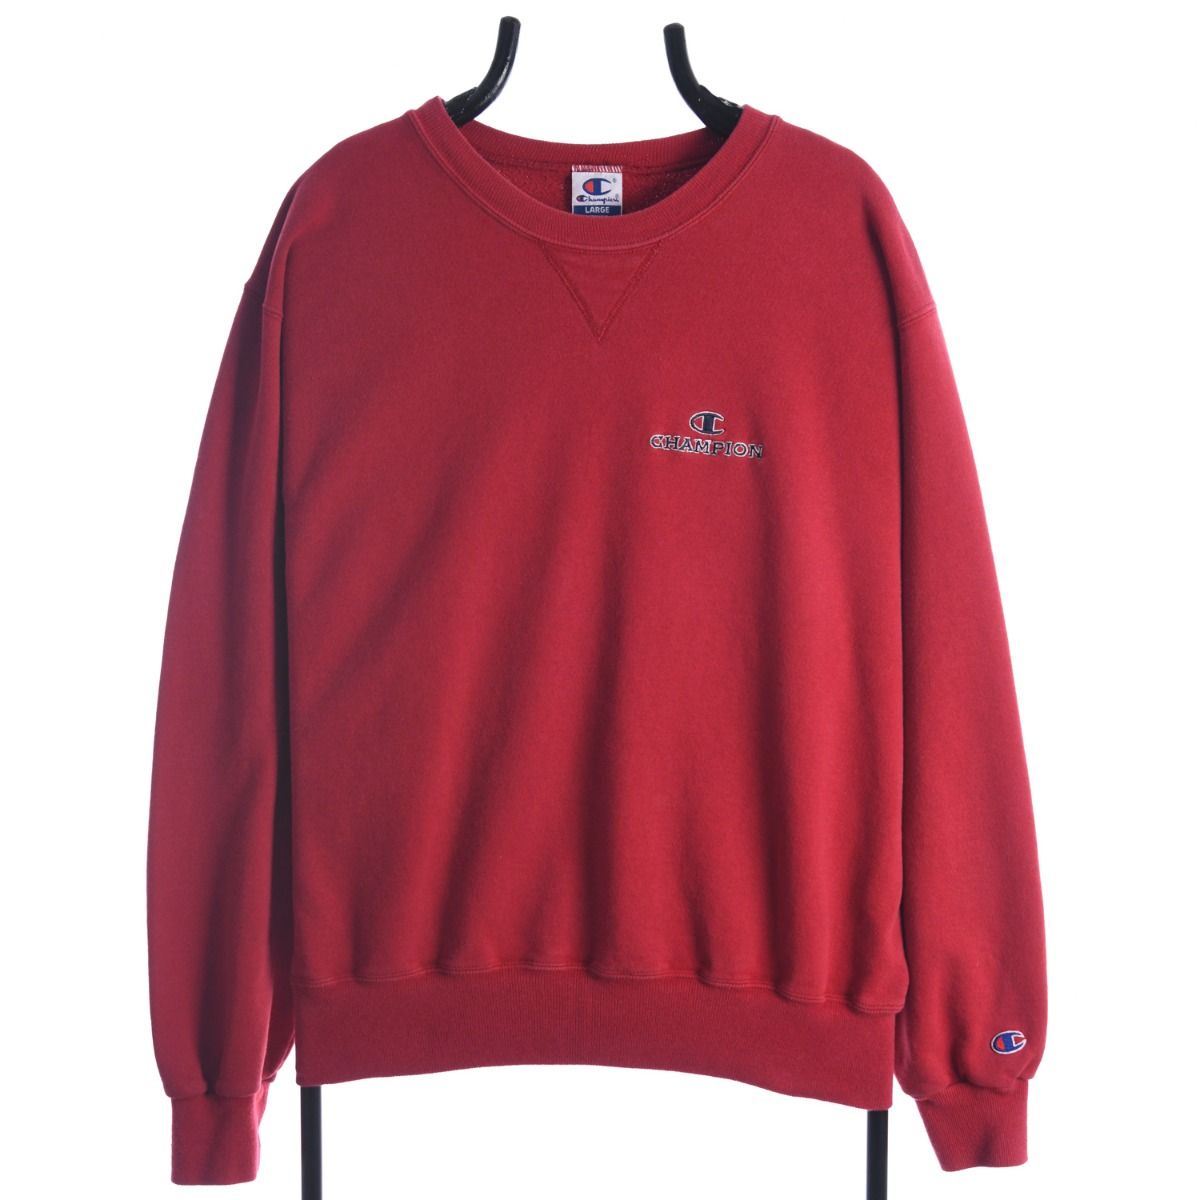 Champion 1990s Red Sweatshirt